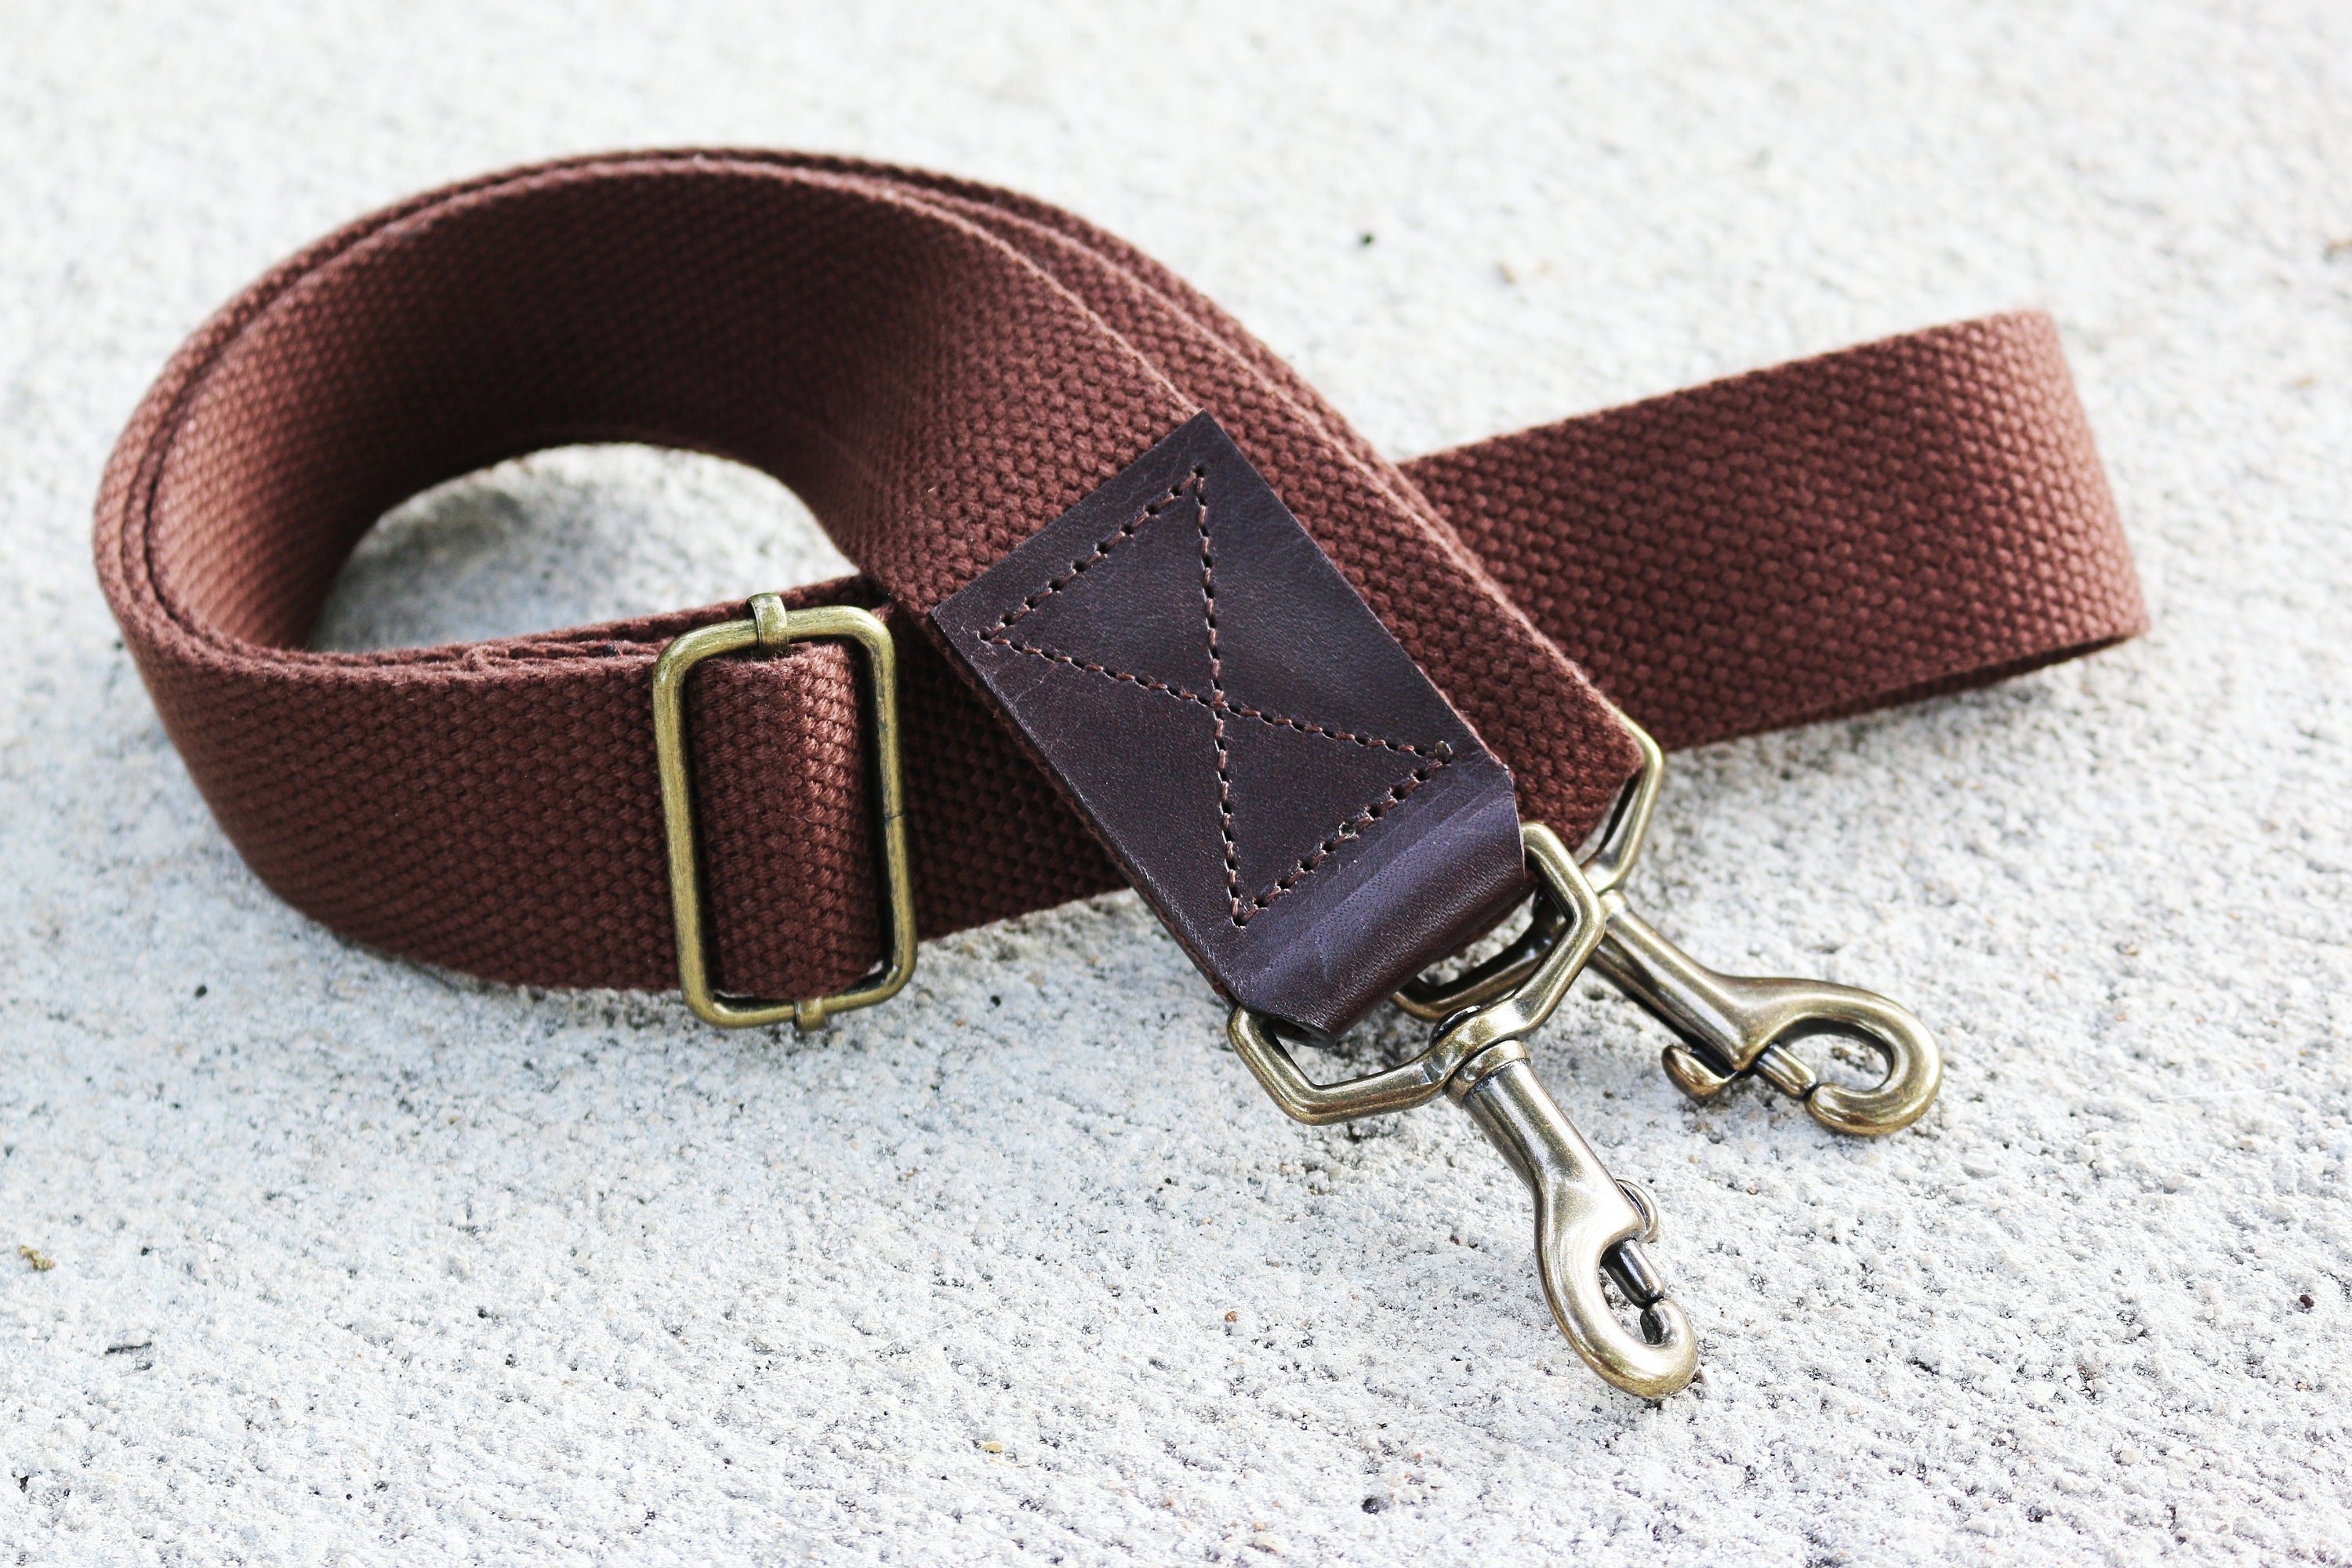 PU Leather Bag Strap Adjustable Belt 128cm Long Replacement Belt